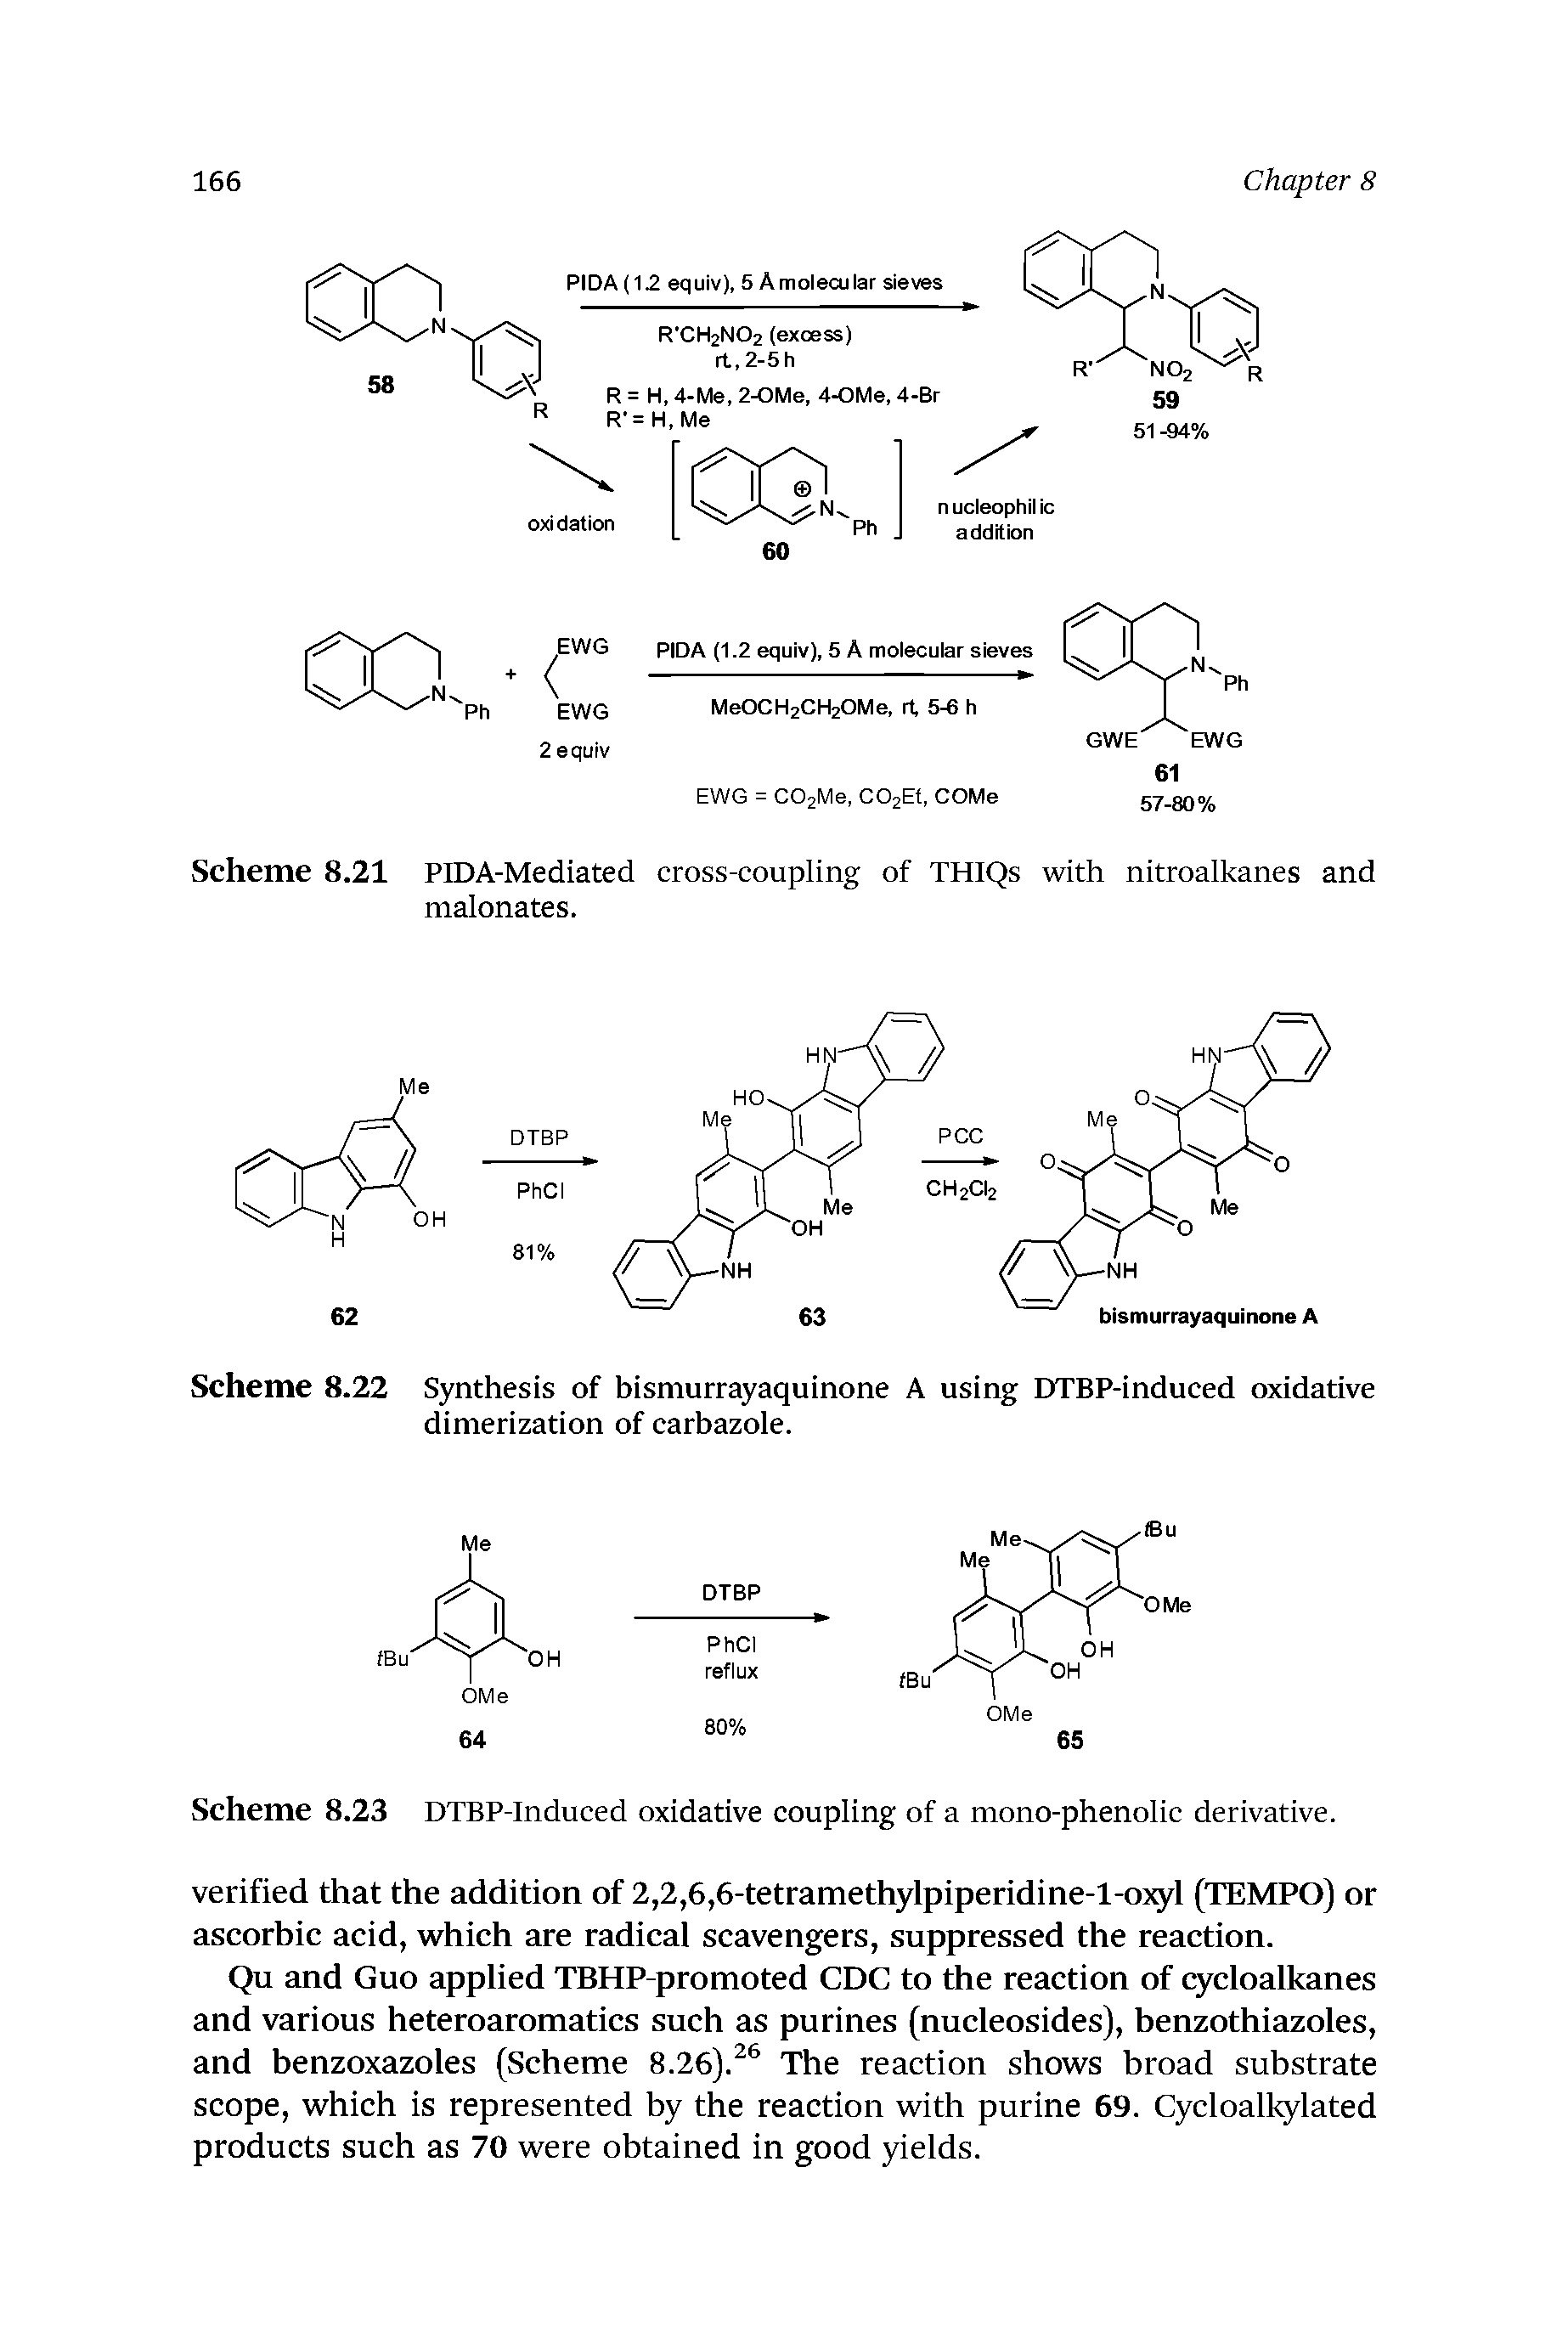 Scheme 8.23 DTBP-Induced oxidative coupling of a mono-phenolic derivative.